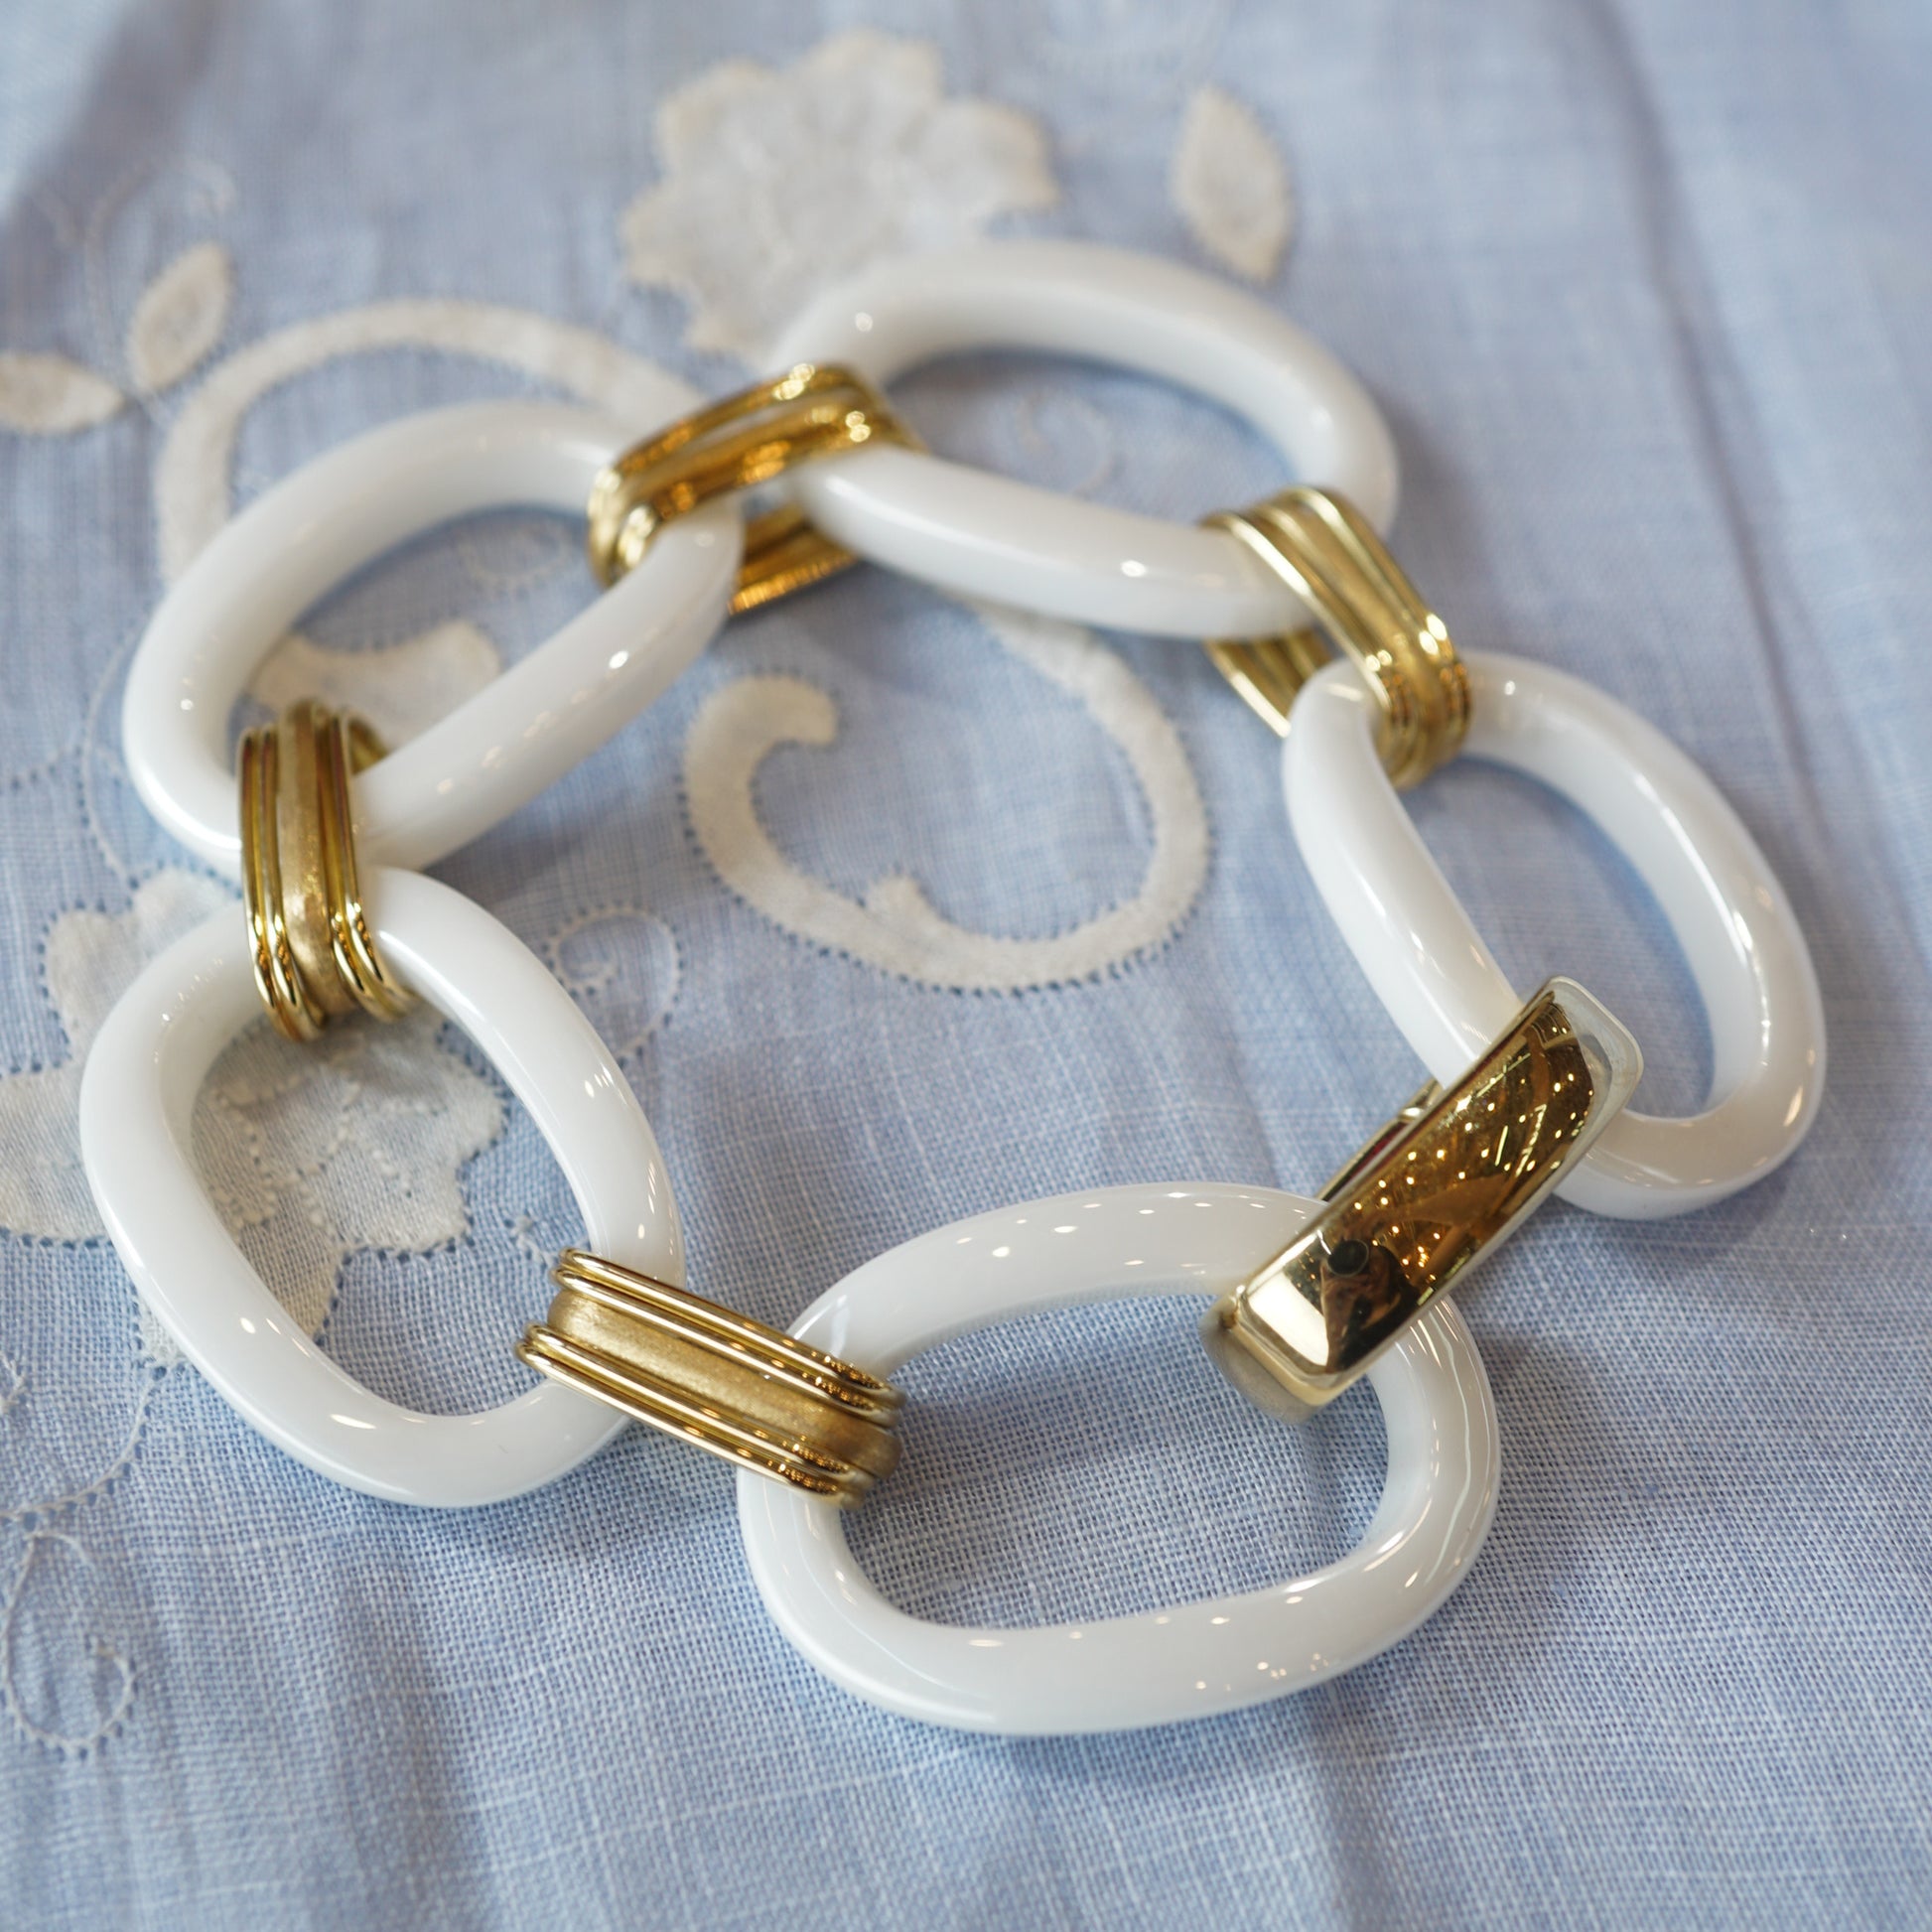 White Ceramic Link Bracelet in 18k Yellow Gold